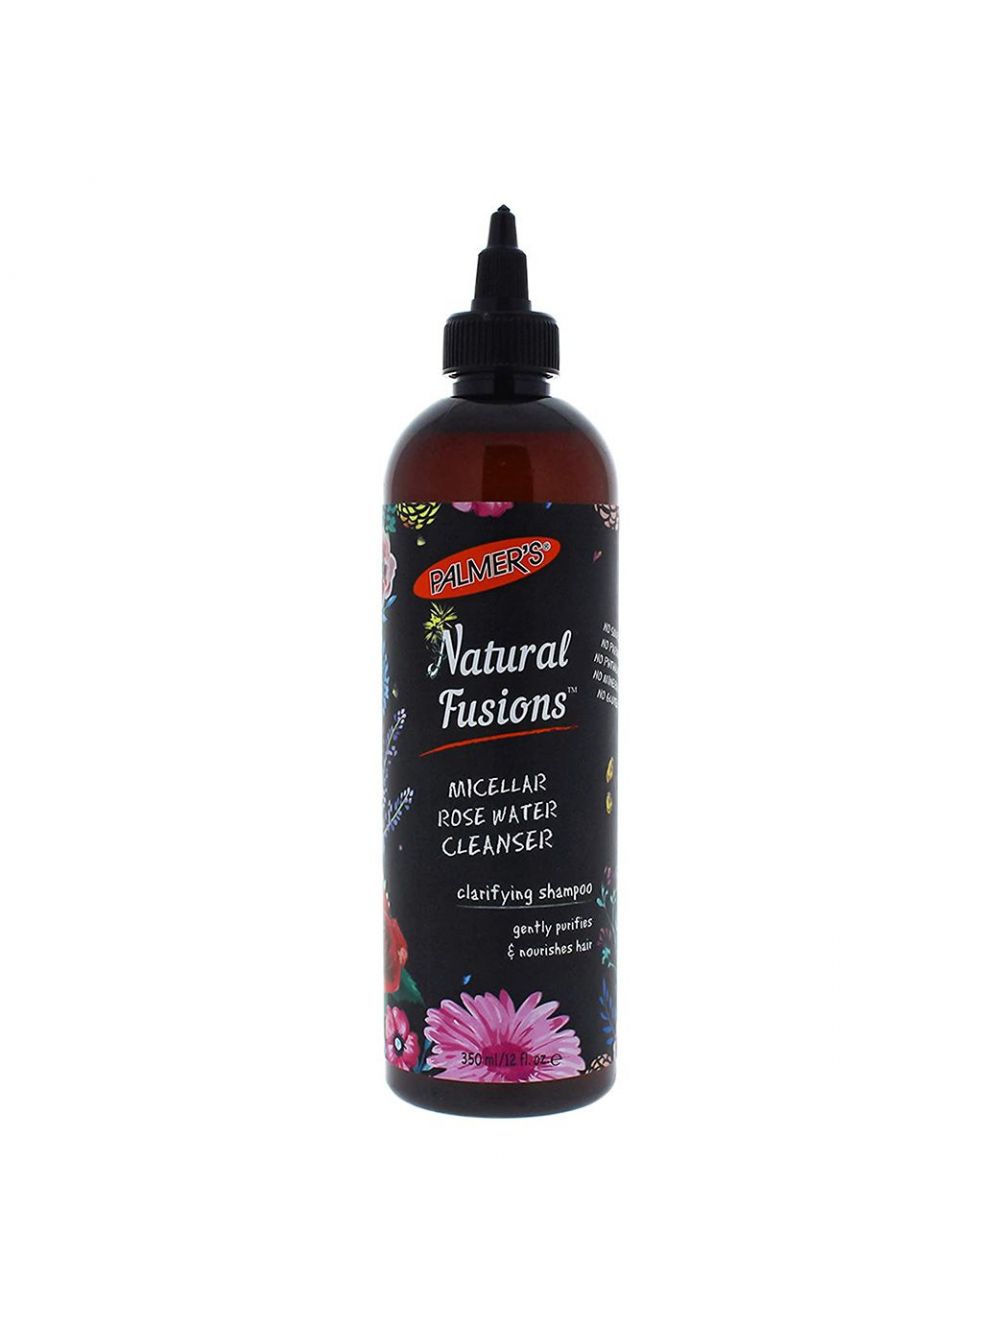 Palmer's Natural Fusions Micellar Rose Water Cleanser Clarifying Shampoo 350ml